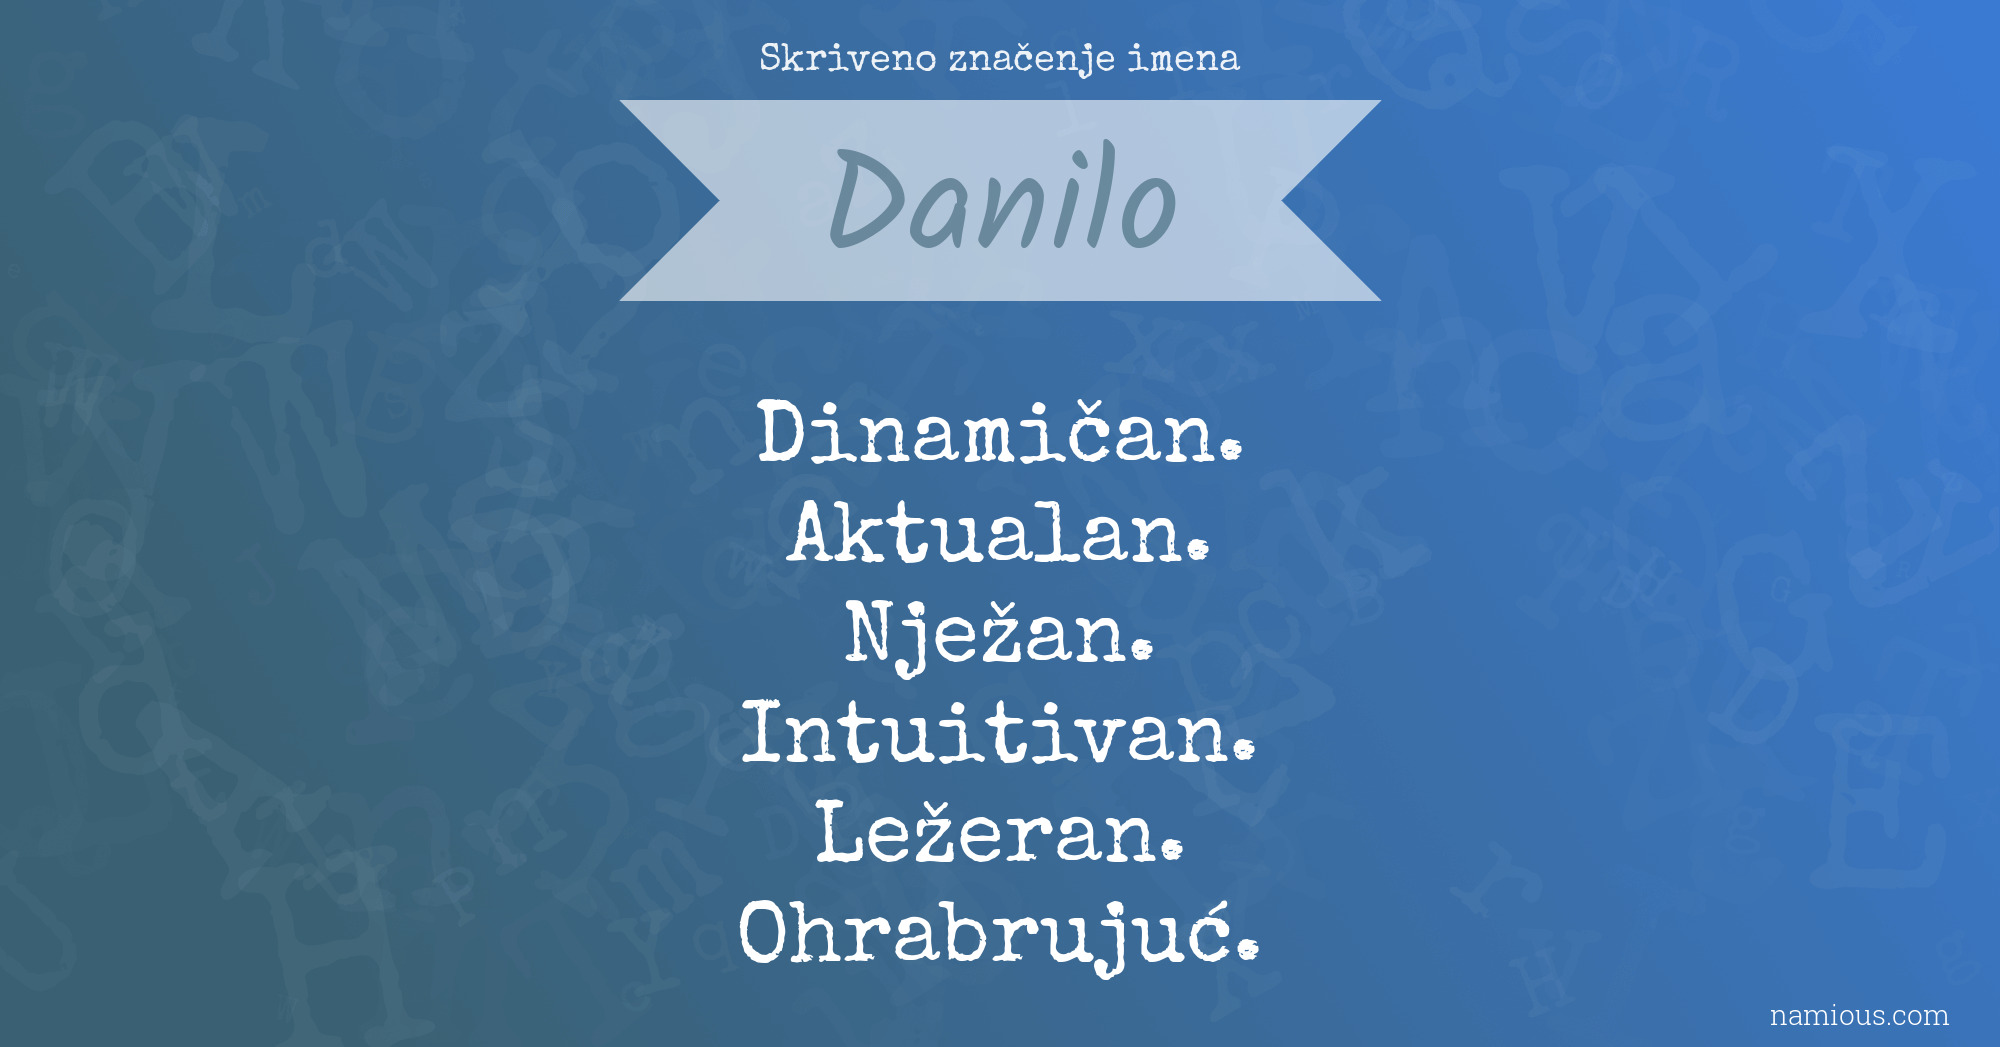 Skriveno značenje imena Danilo